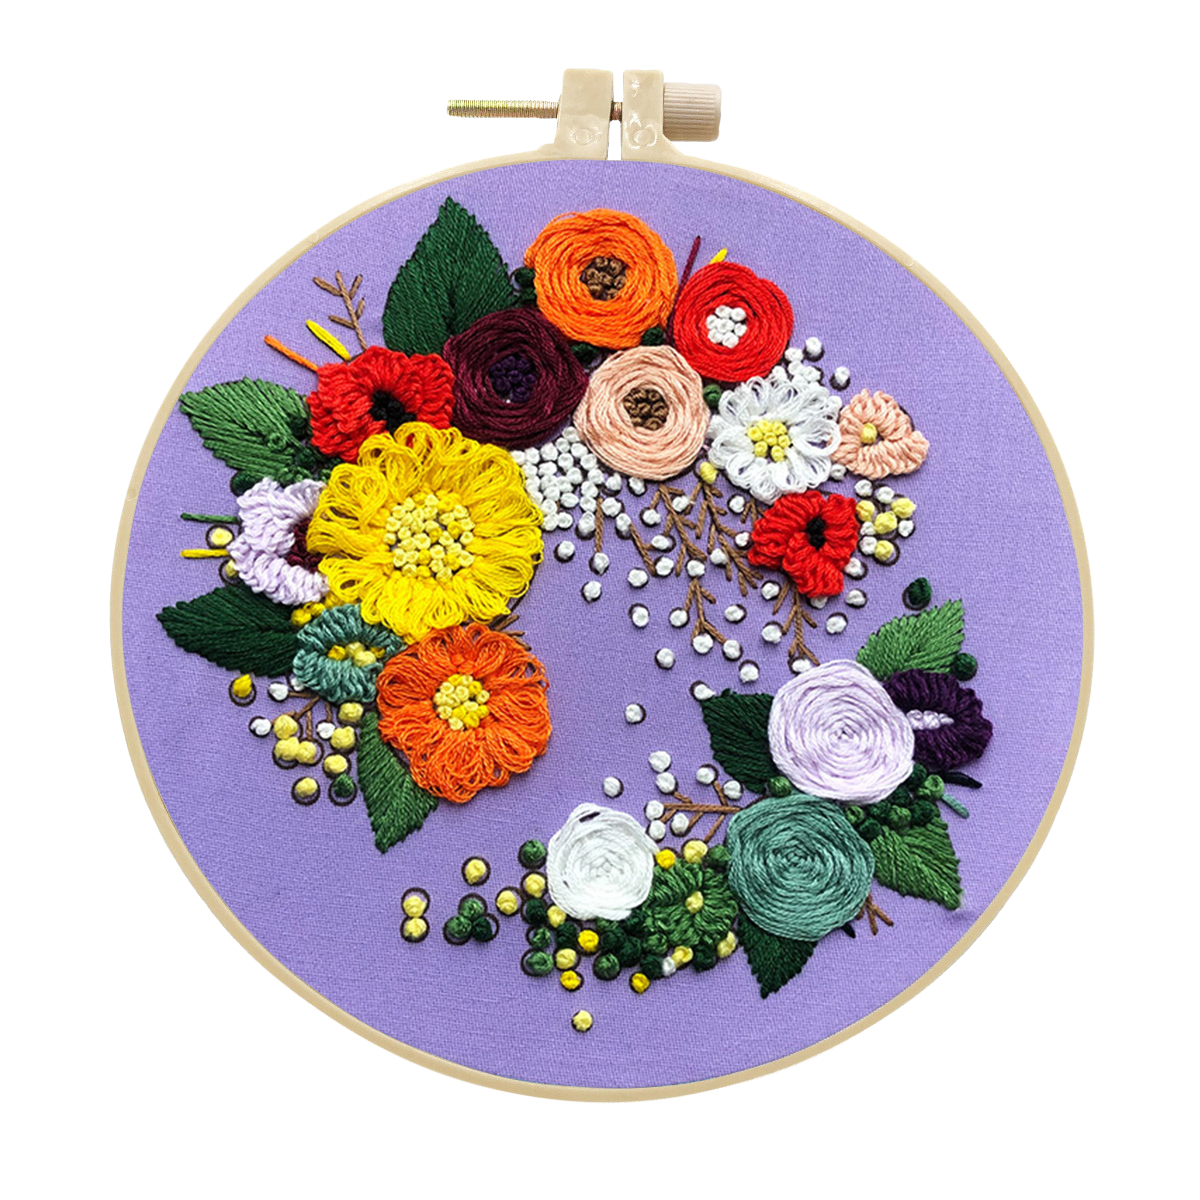 DIY Handmade Embroidery Kit Craft Cross Stitch Kits Beginner - Romantic Wreath Pattern